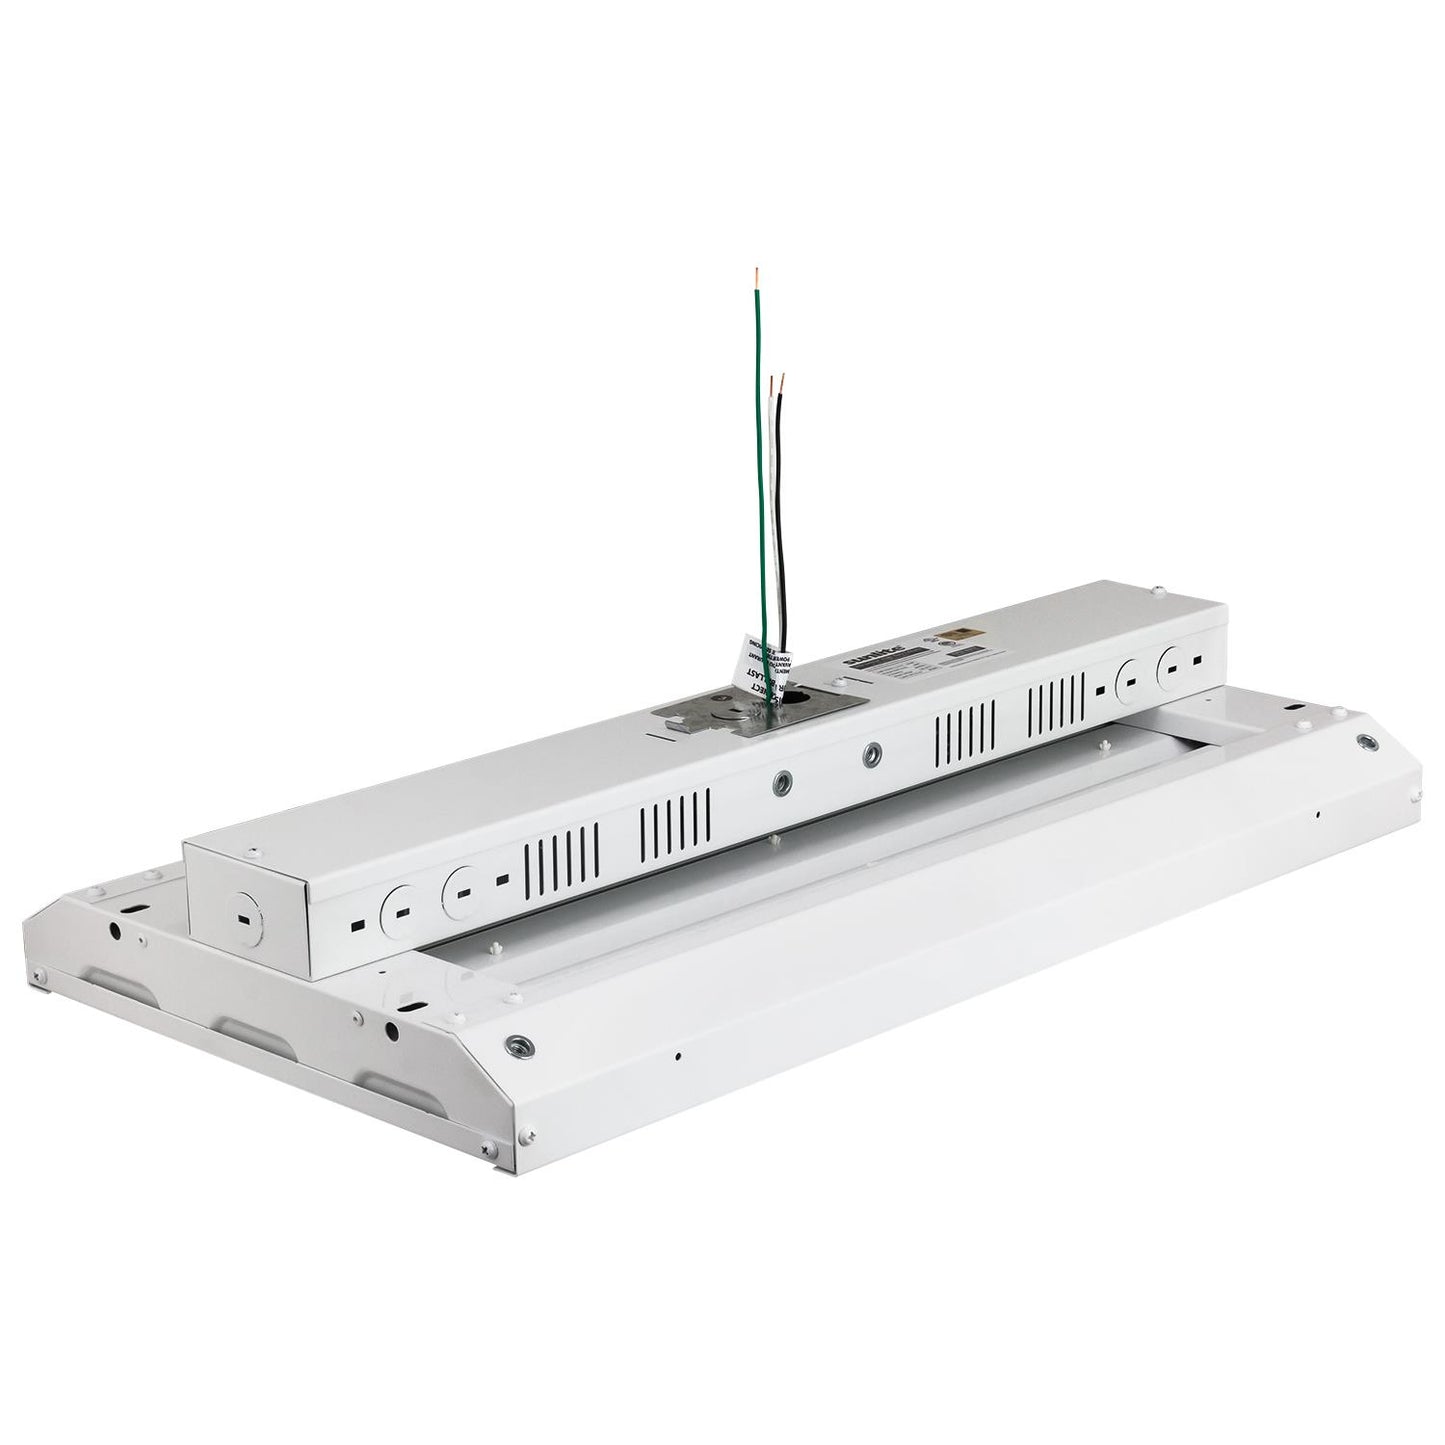 Sunlite 48" Linear LED High Bay Fixture, 265 Watts, 5000K - Super White, White Finish